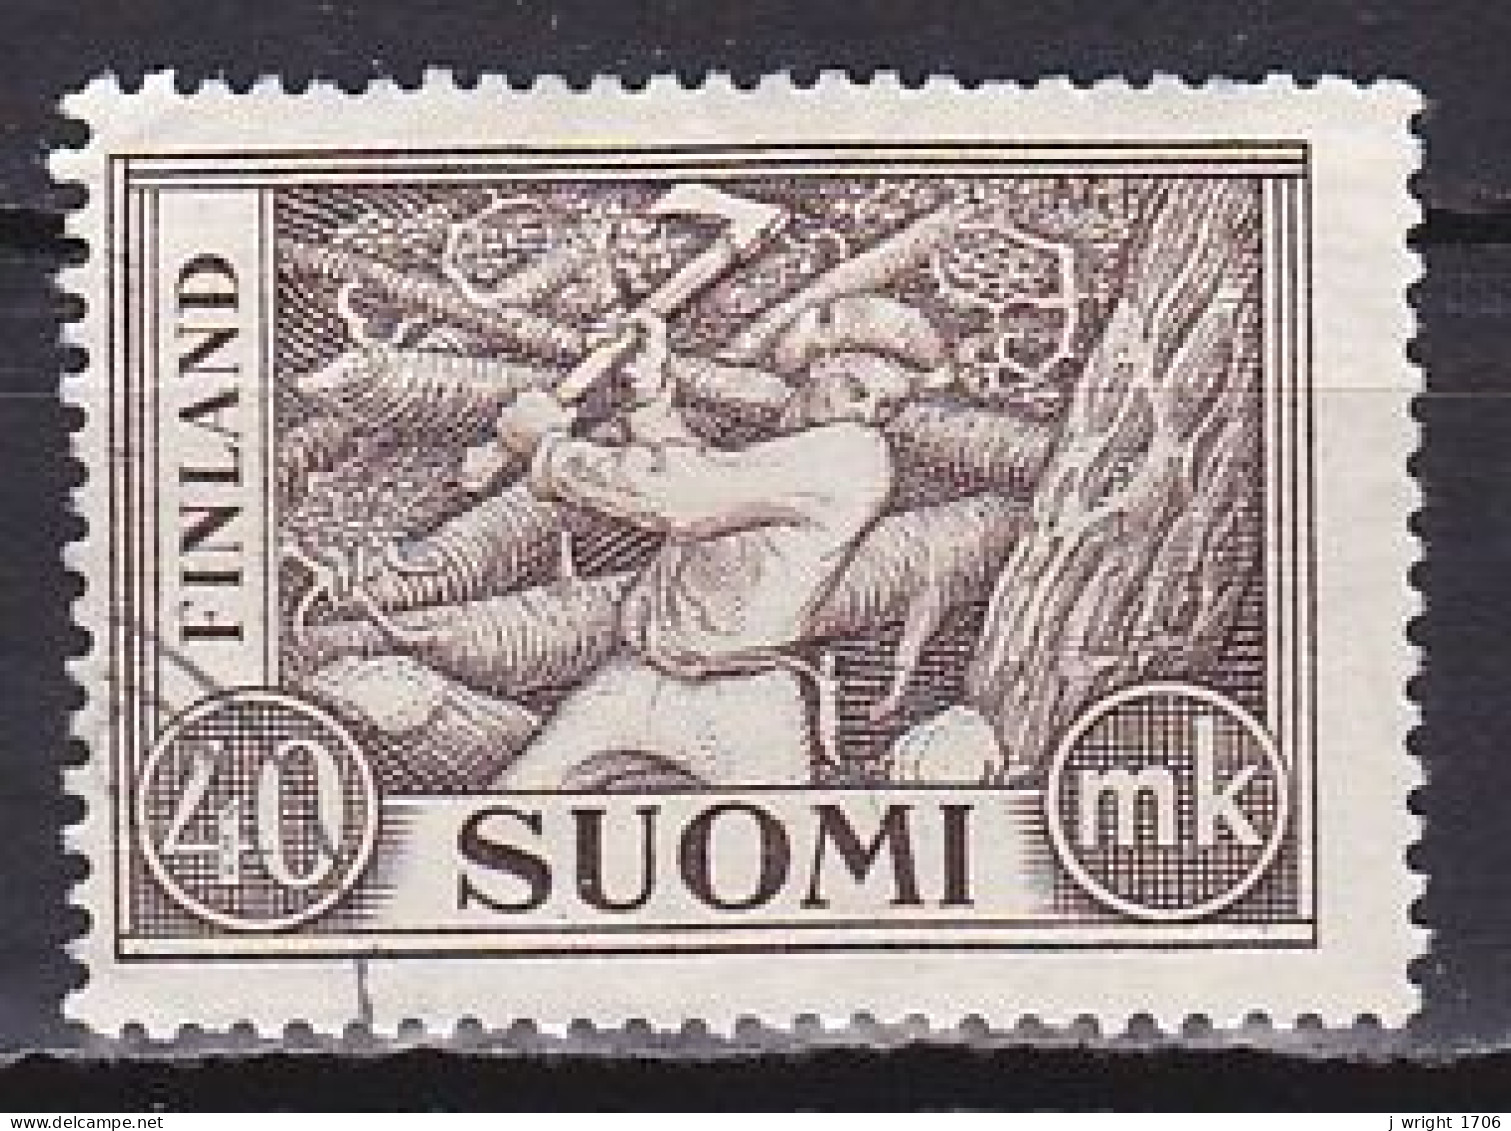 Finland, 1952, Wood Cutter, 40mk, USED - Usados